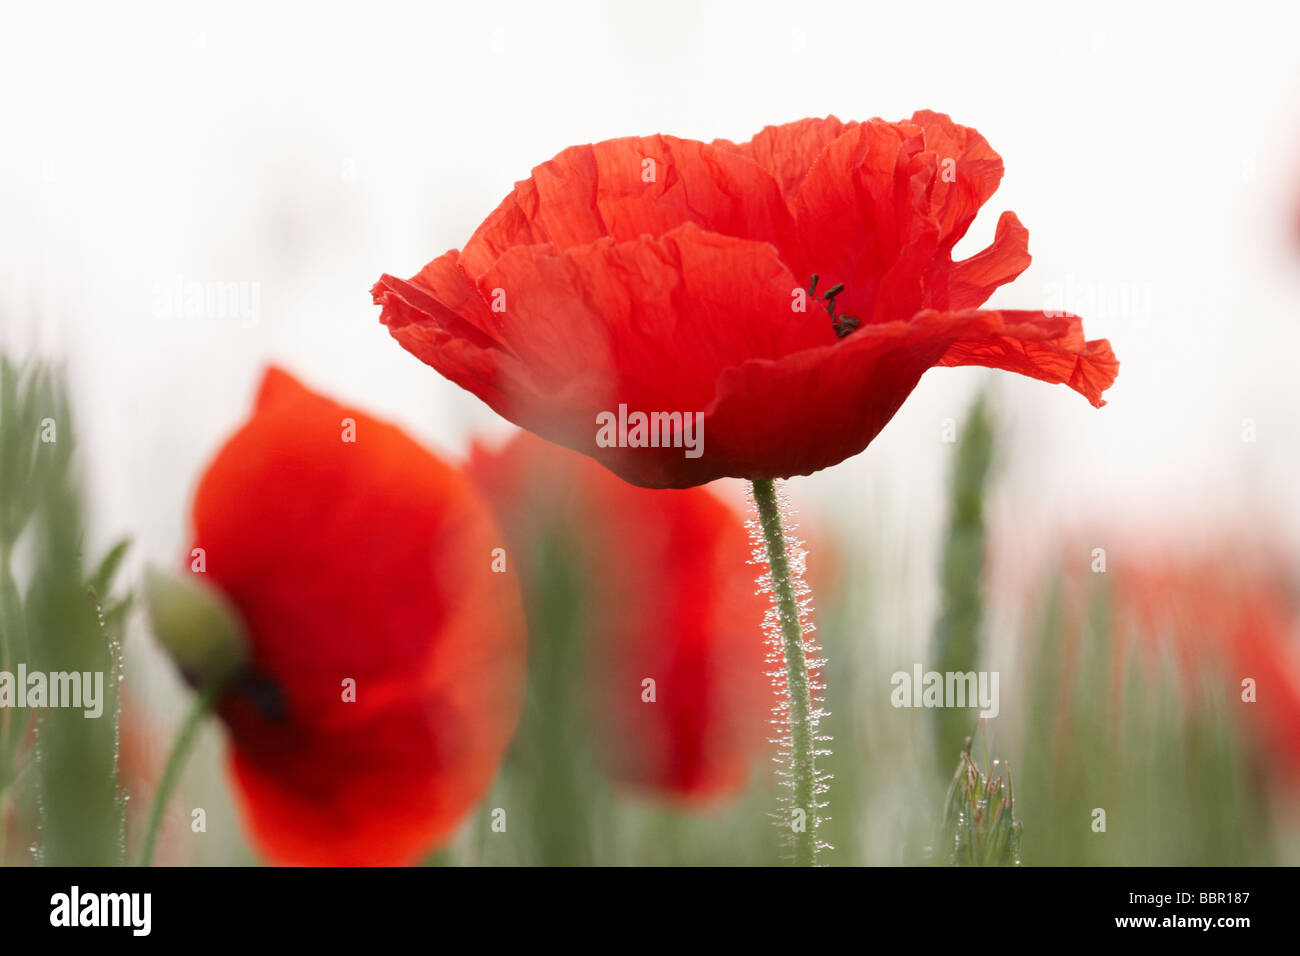 common poppy, corn poppy, red poppy (Papaver rhoeas), single blossom with poppy field behind Stock Photo